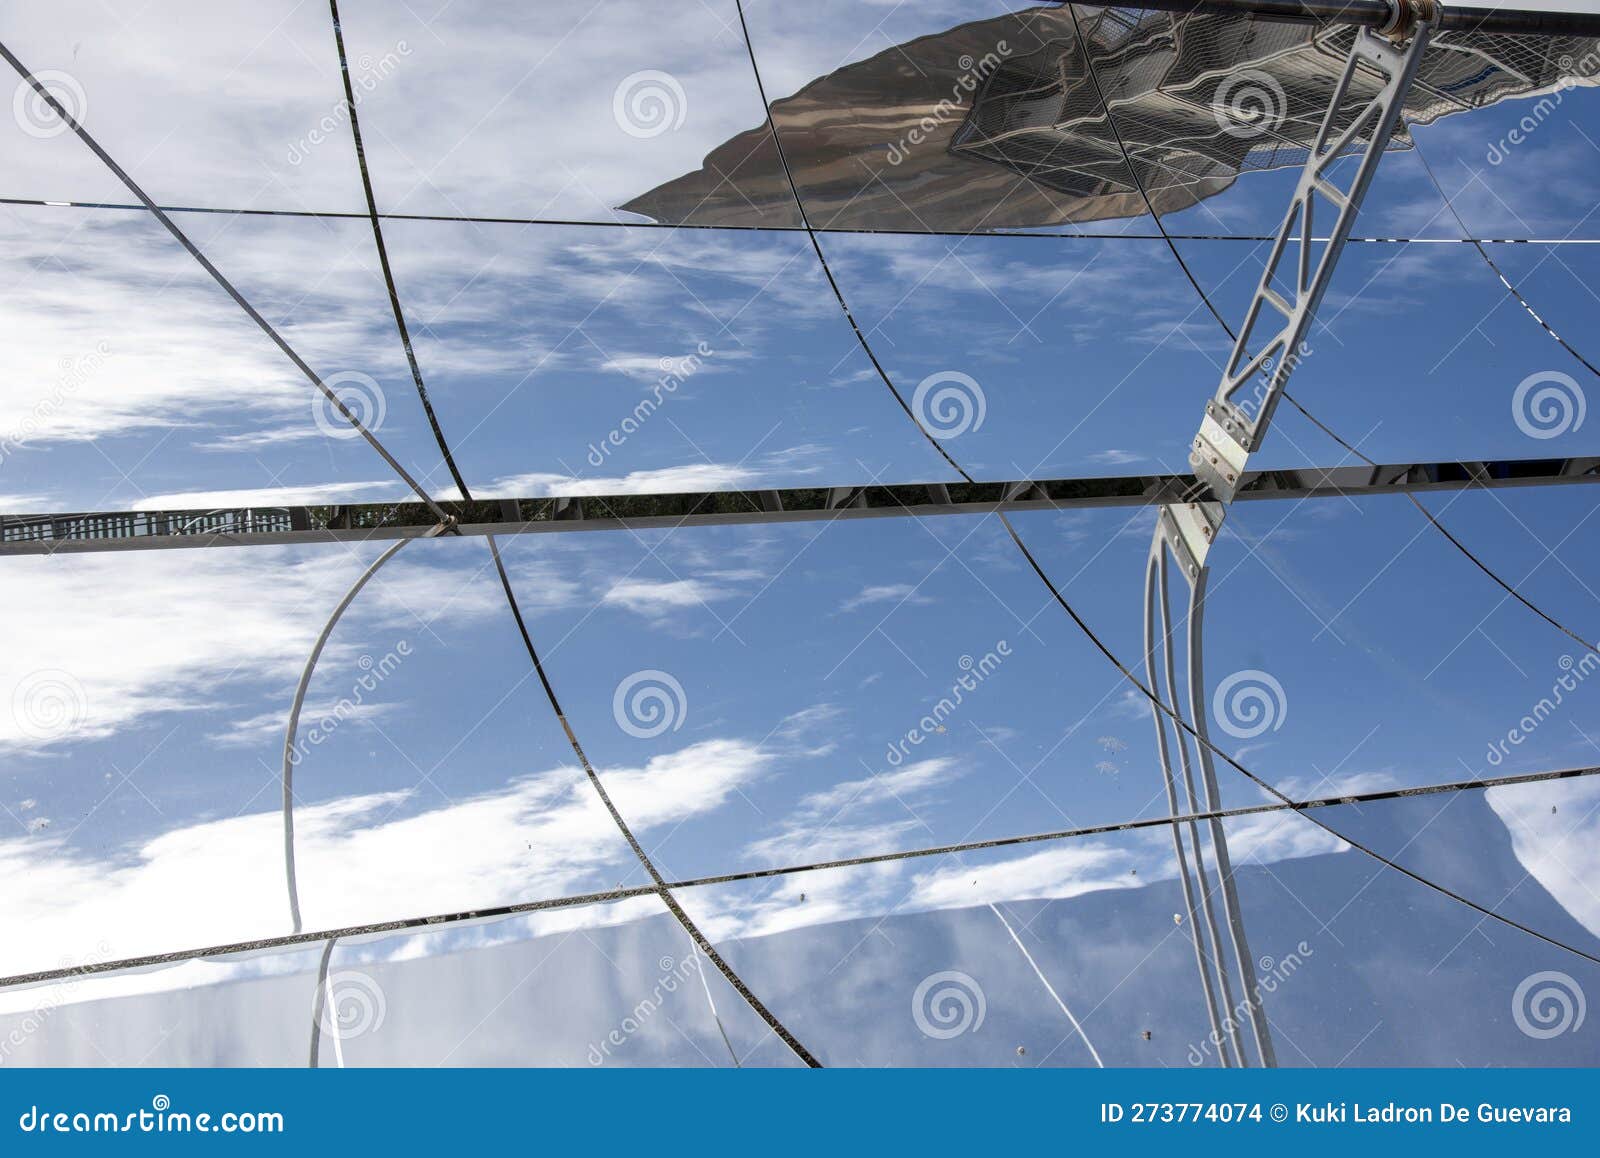 parabolic solar mirrors of a solar energy installation